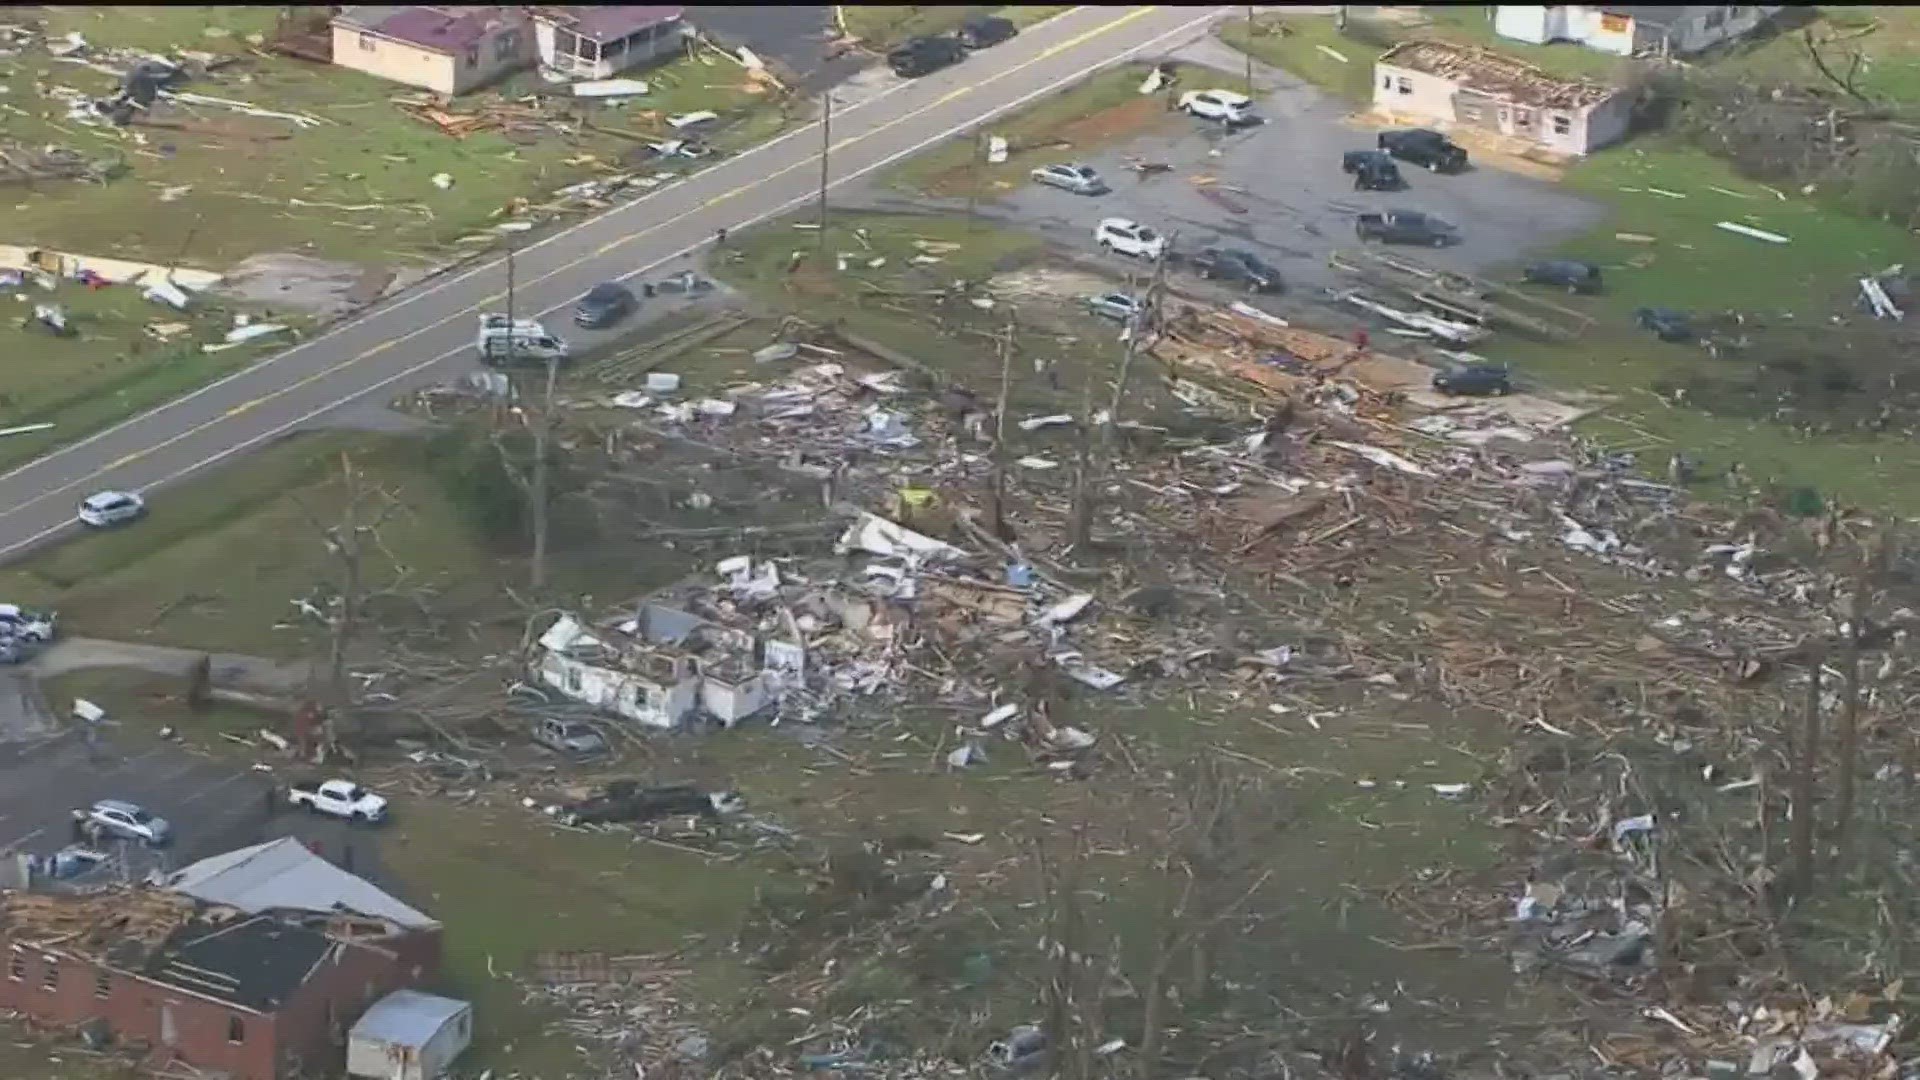 Gov. Kemp says an EF-3 tornado tore through Troup County.